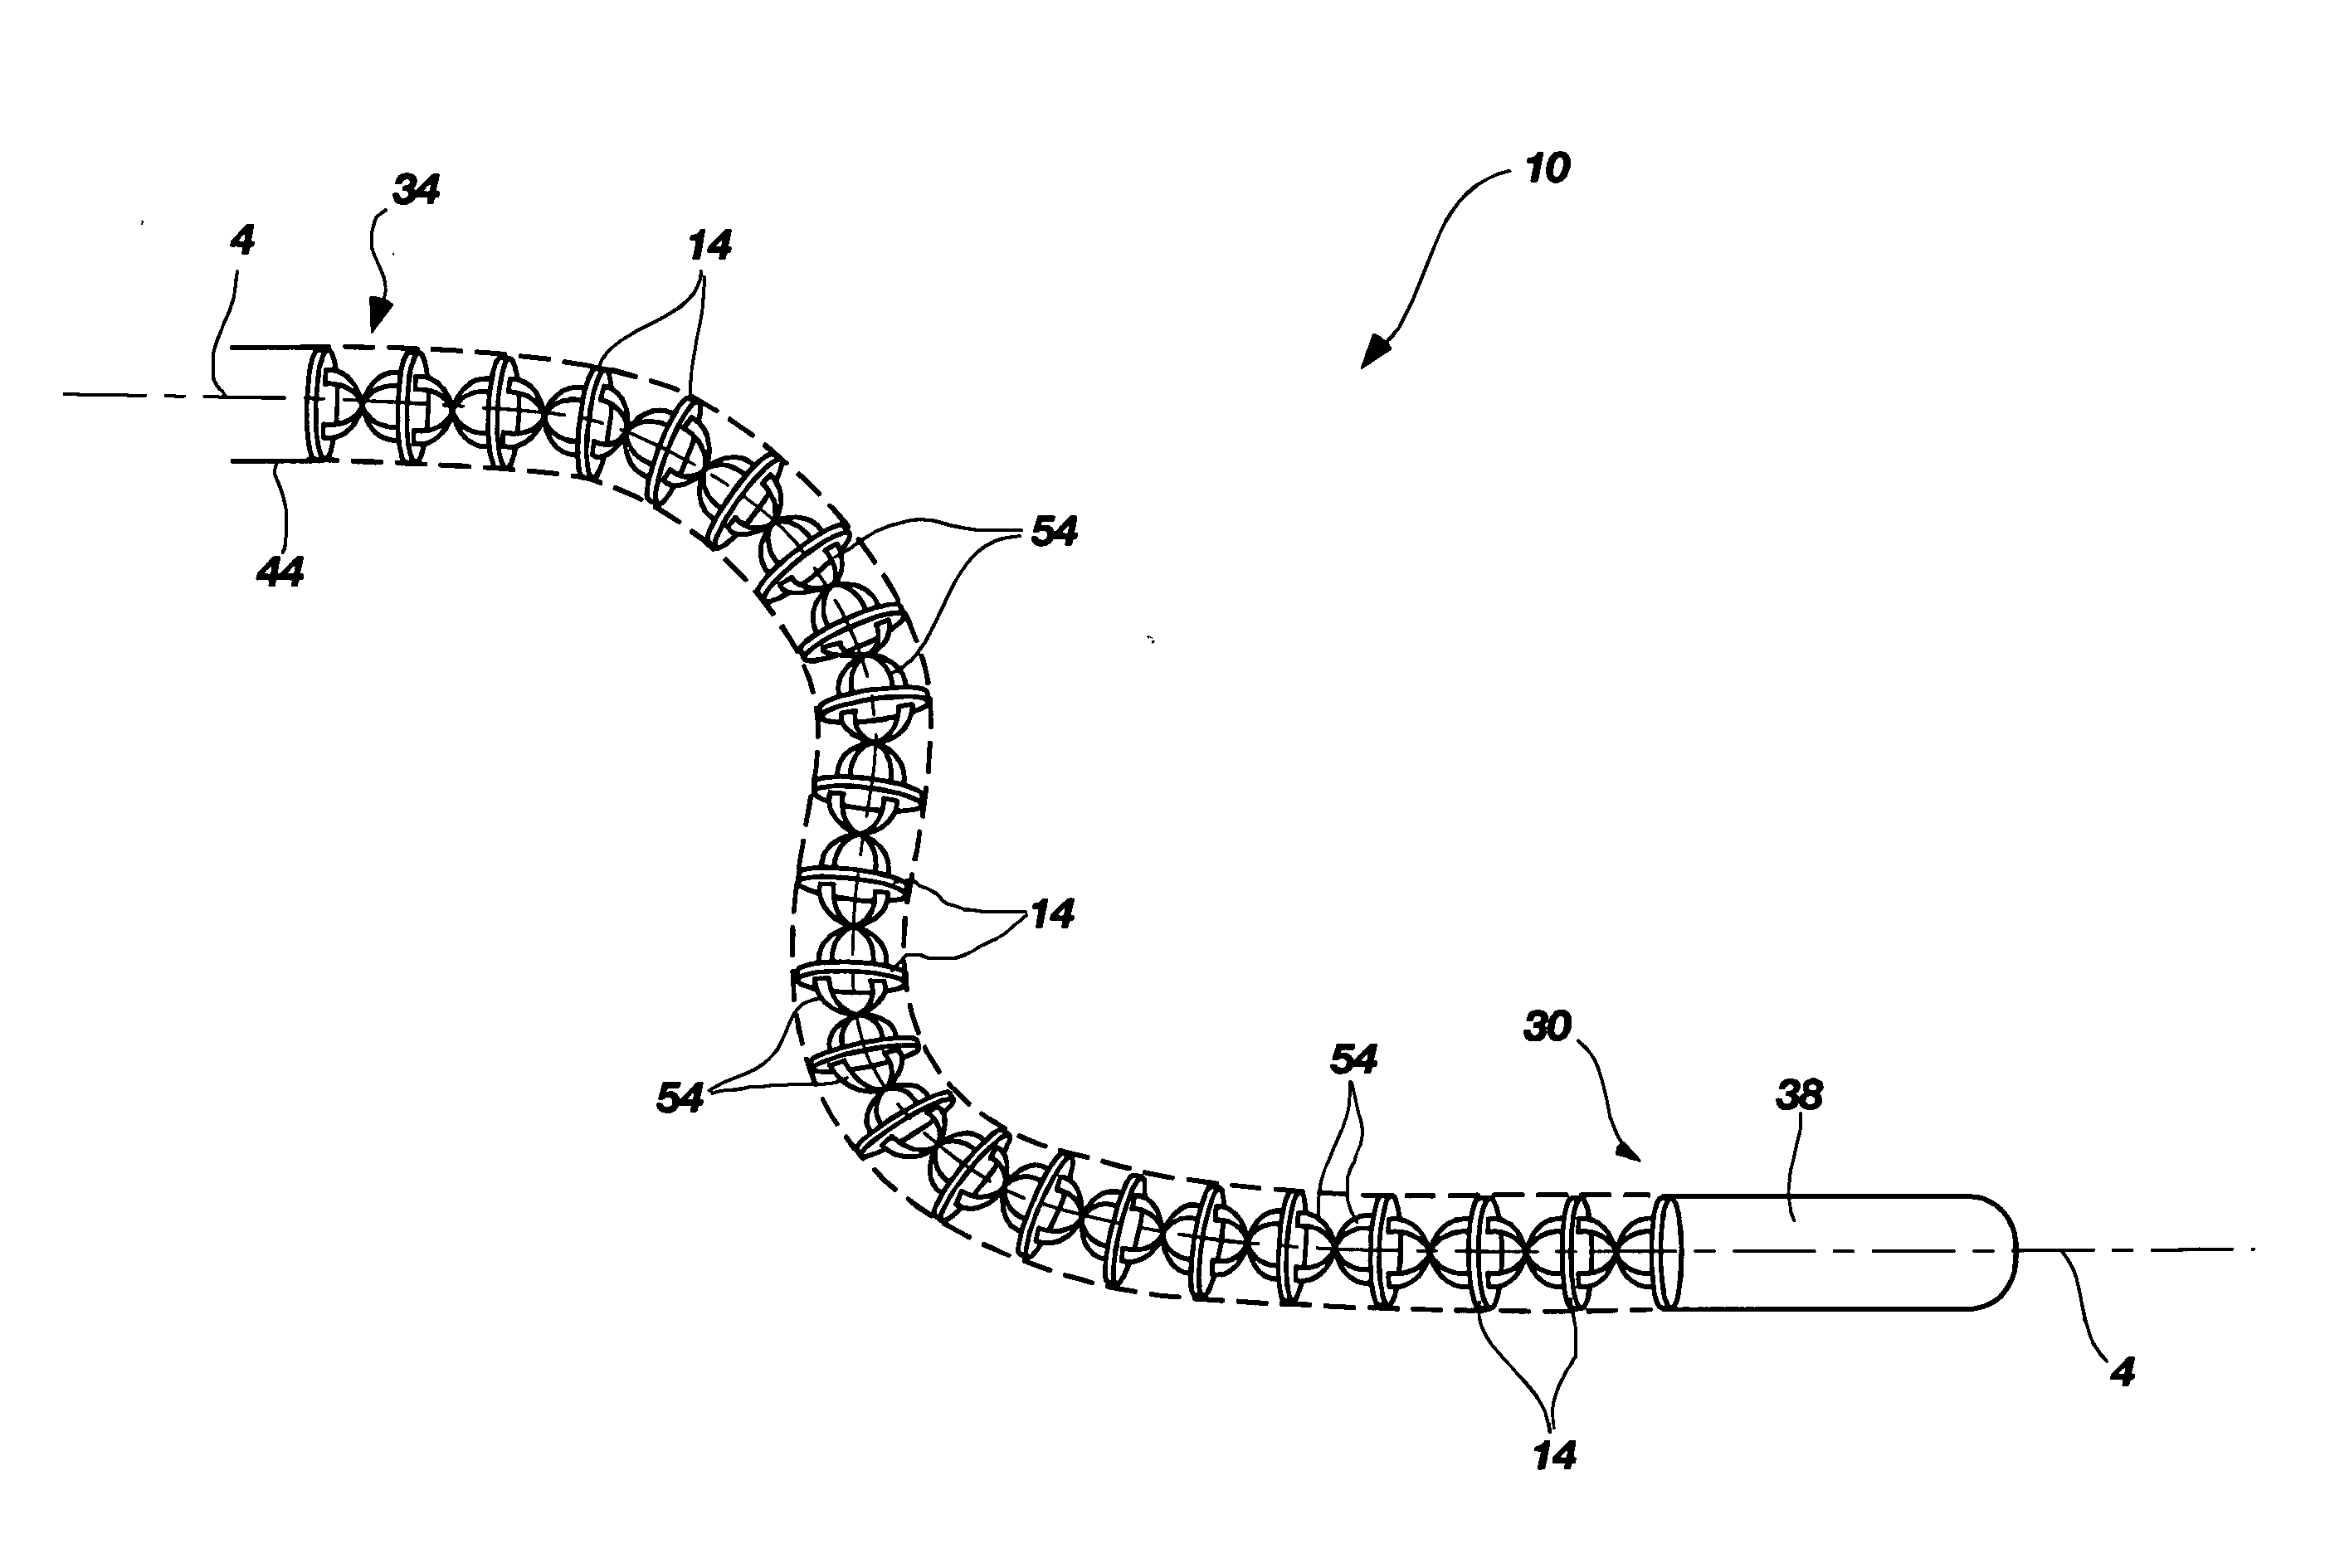 Mechanical serpentine device